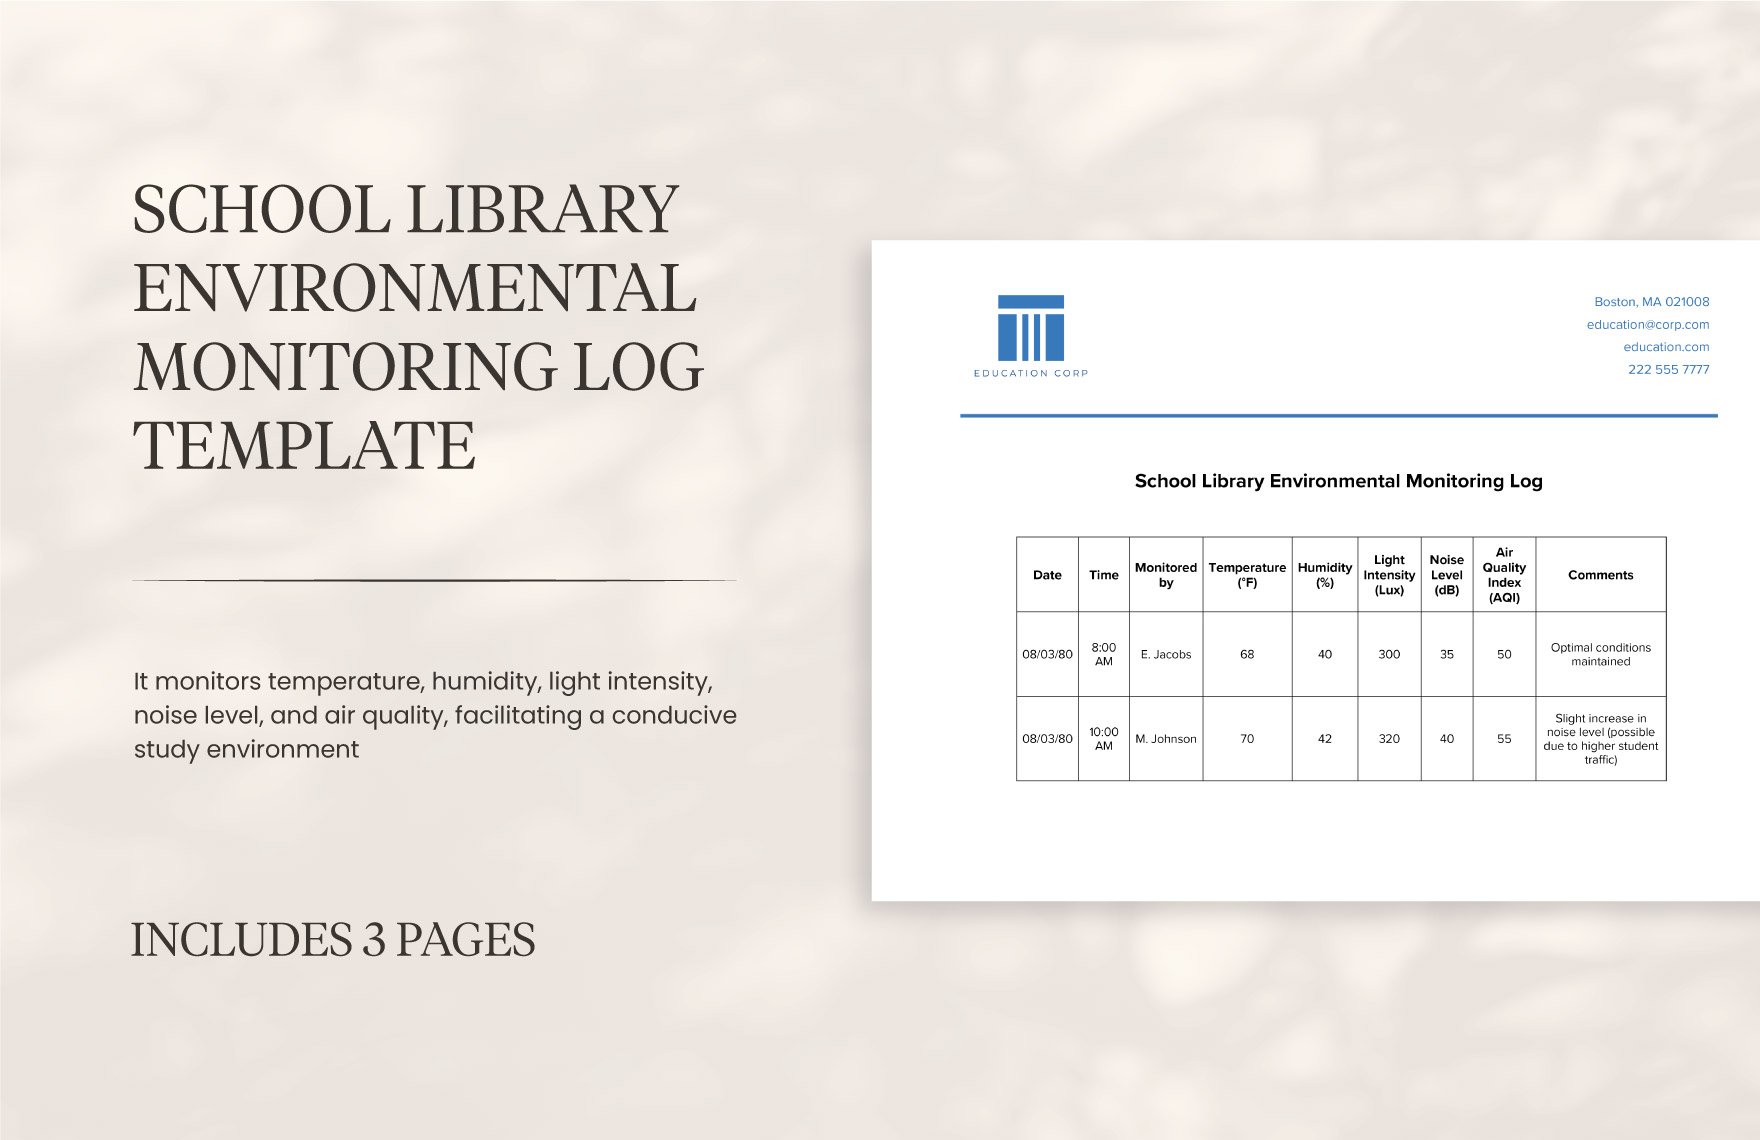 School Library Environmental Monitoring Log Template